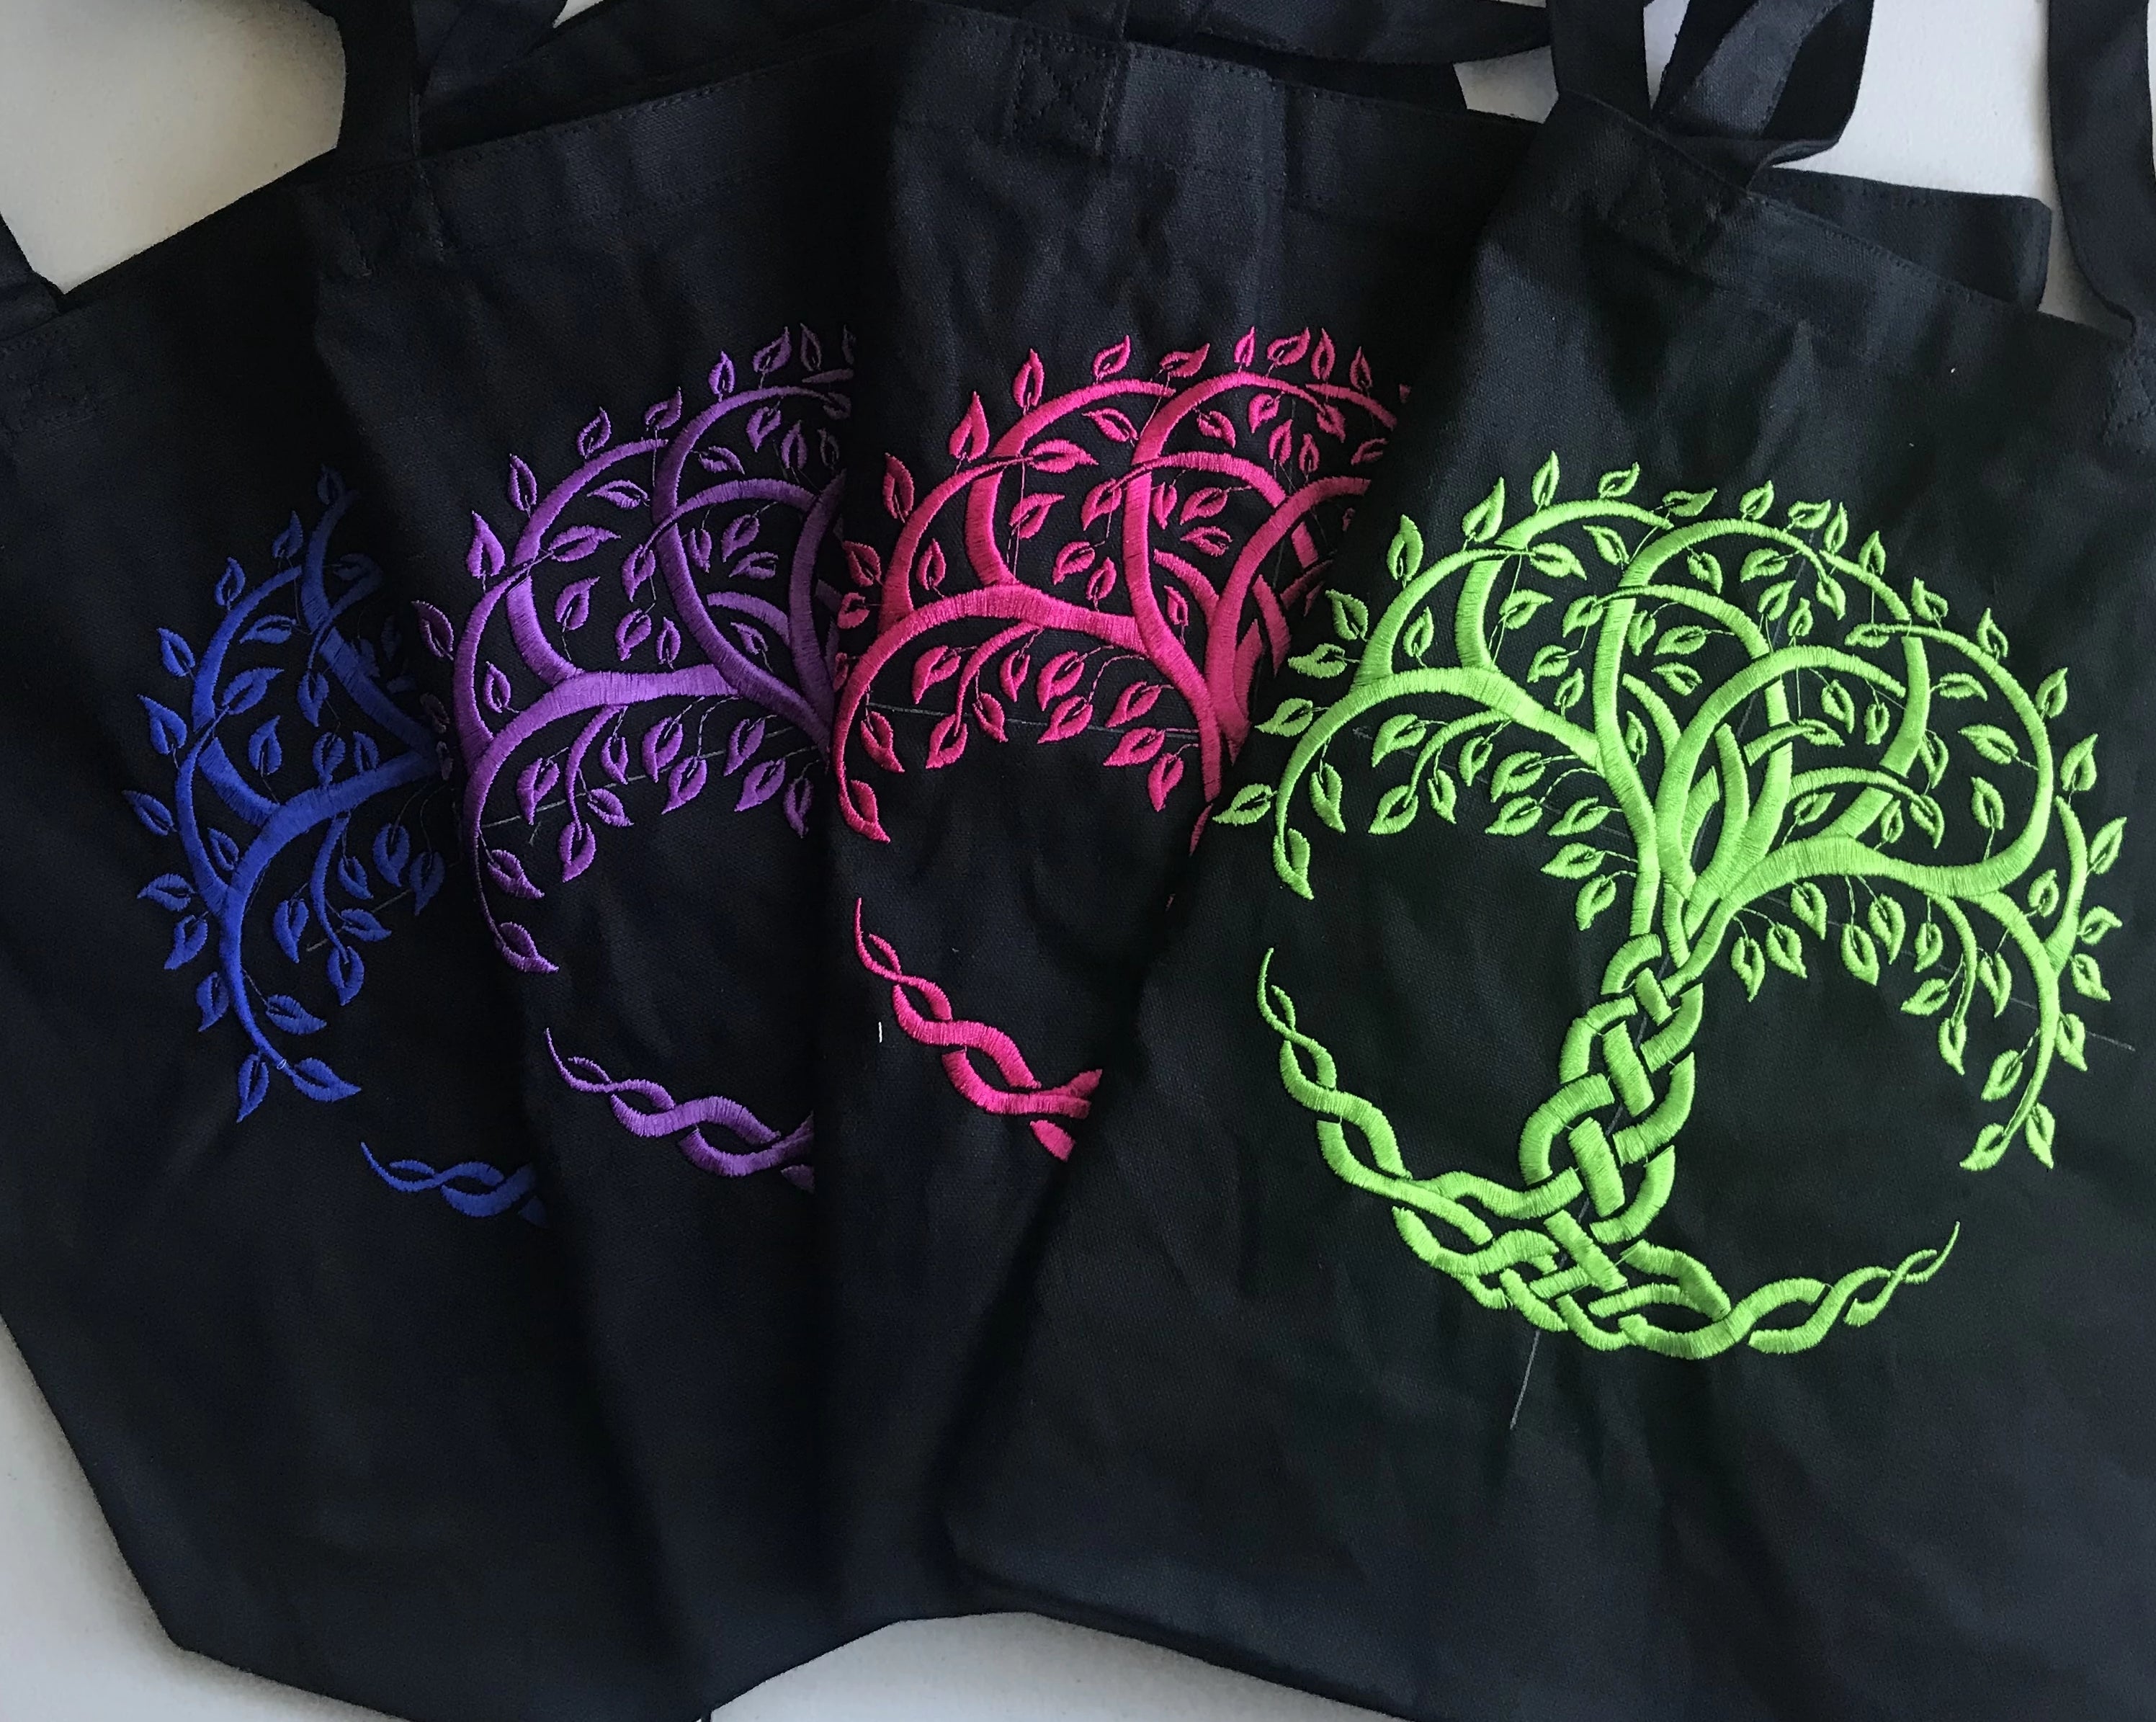 Green Celtic Tree Of Life Purse Tote Bag Handbag For Women